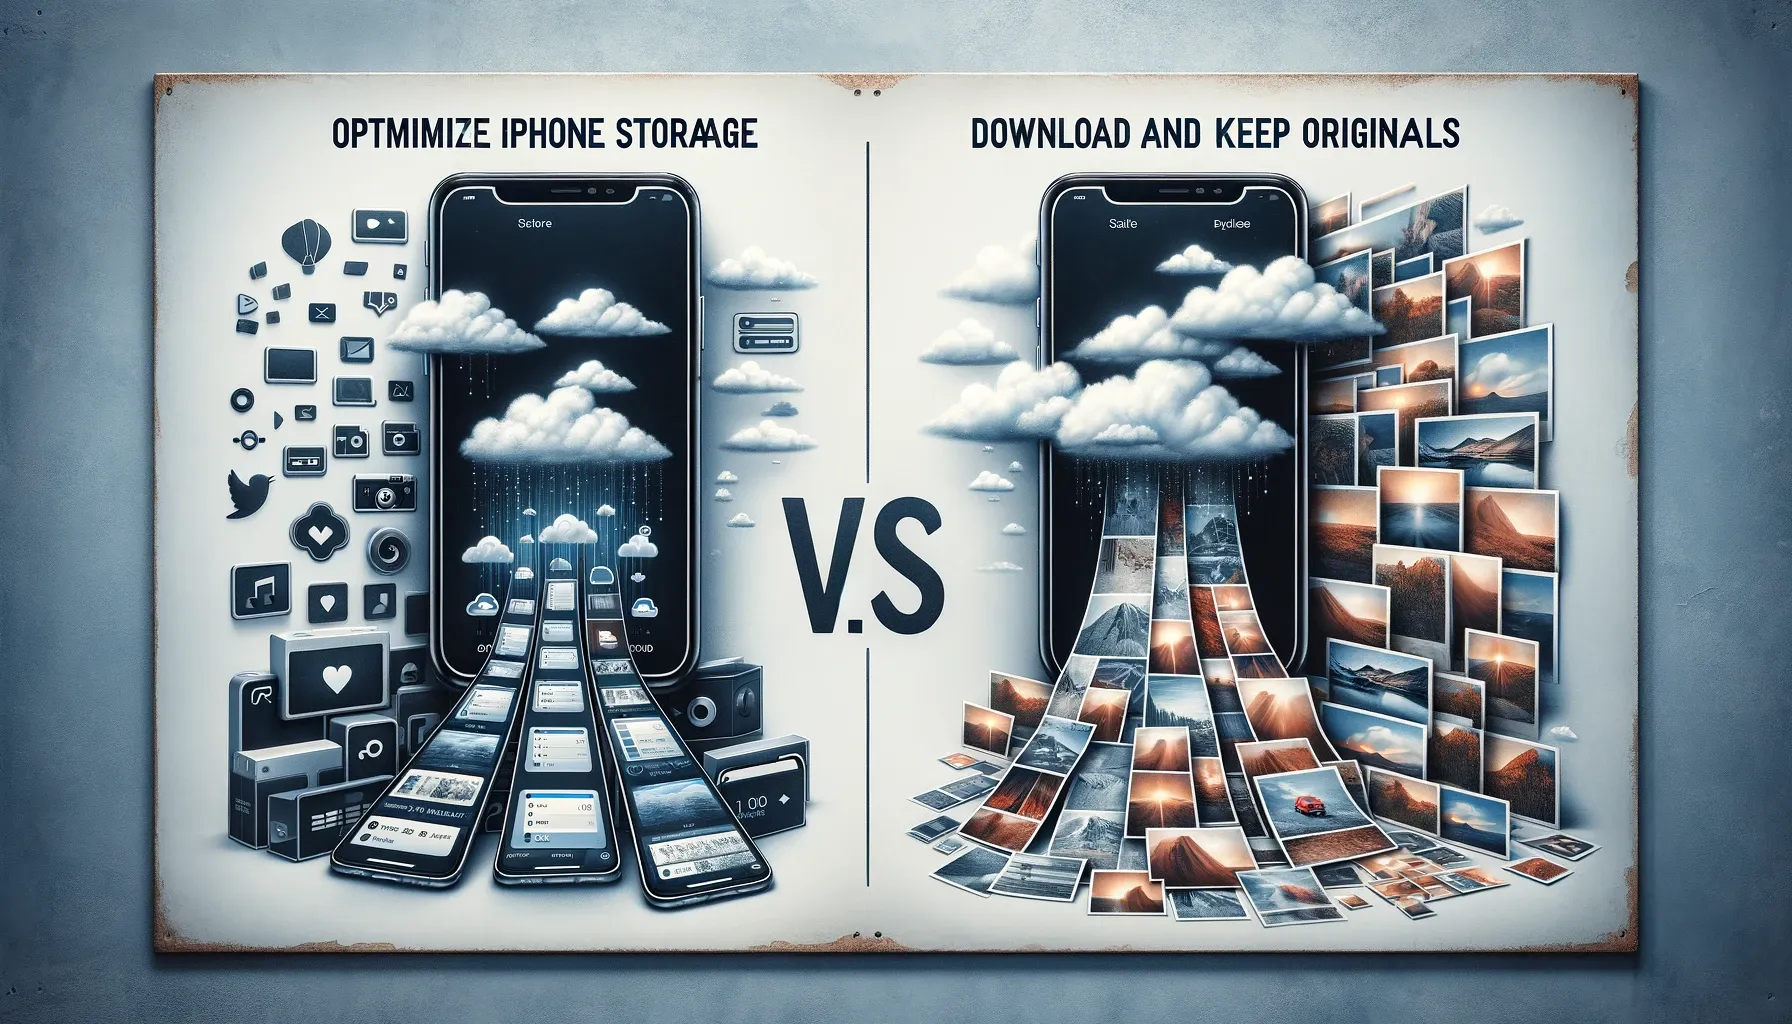 Optimize iPhone Storage vs. Download and Keep Originals